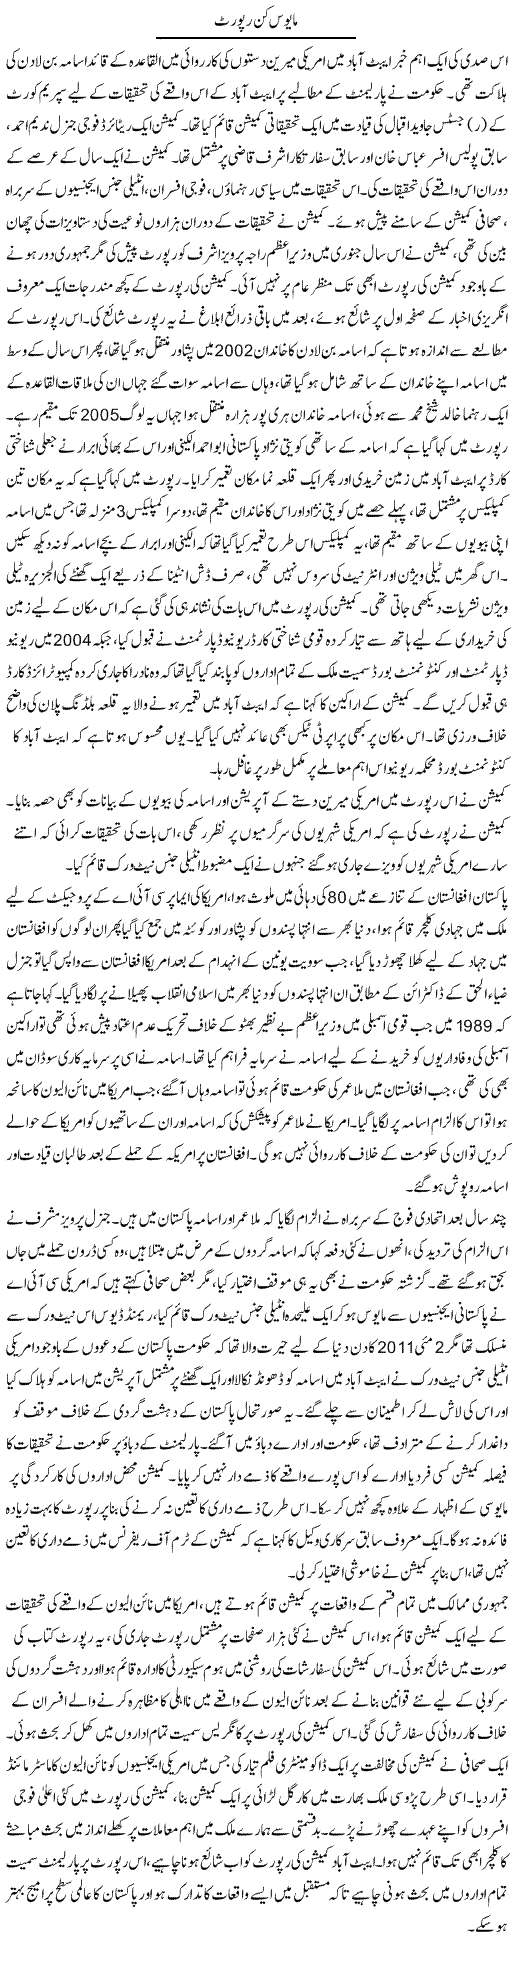 Mayoos Kun Report | Tausif Ahmad Khan | Daily Urdu Columns